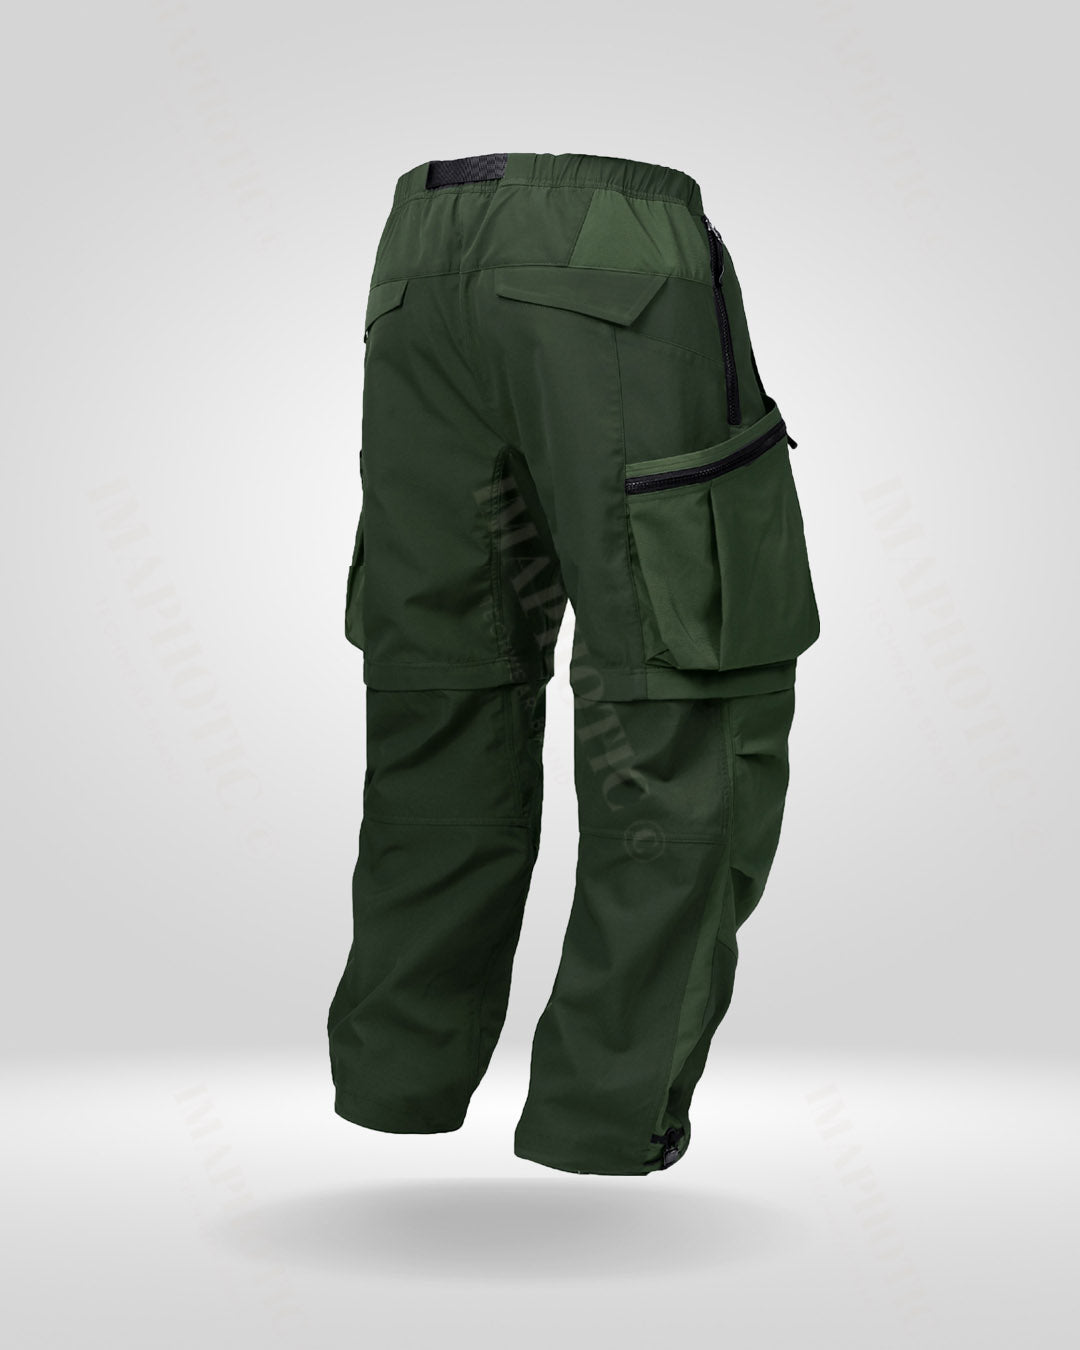 Convertible Trail Pants - Water Resistant, Oil Resistant & Dirt Resistant